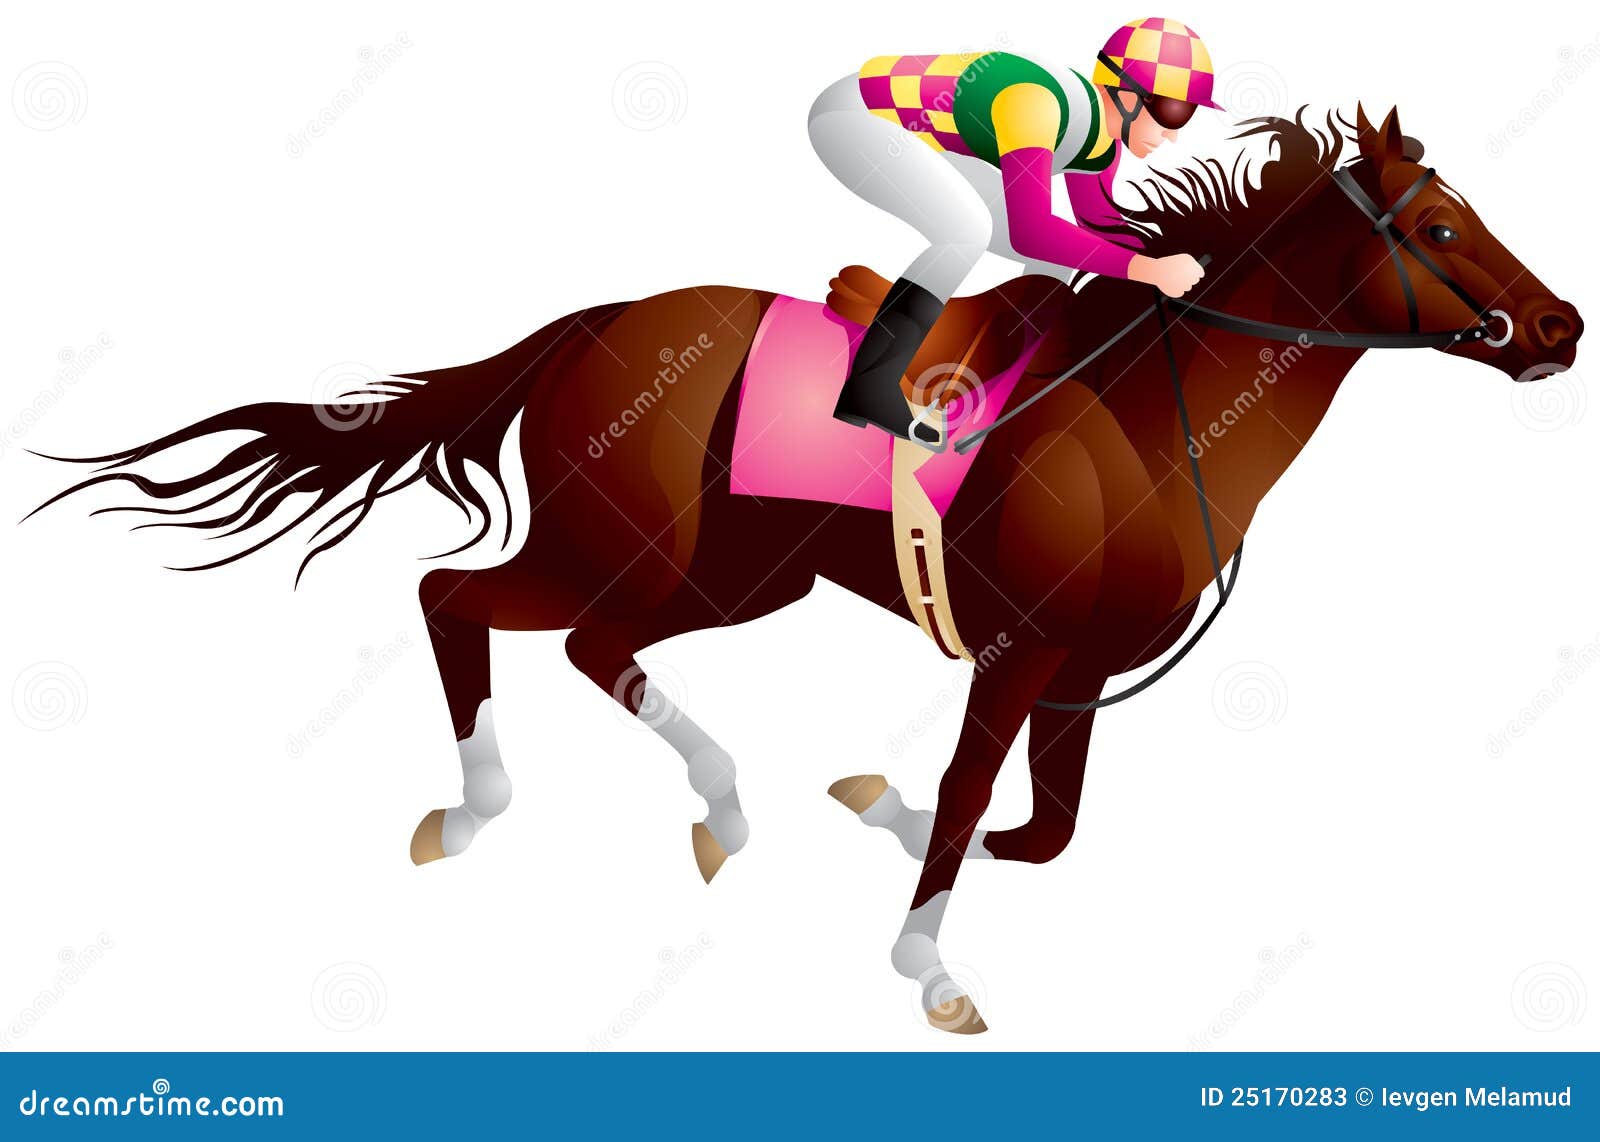 sport horse clipart - photo #9